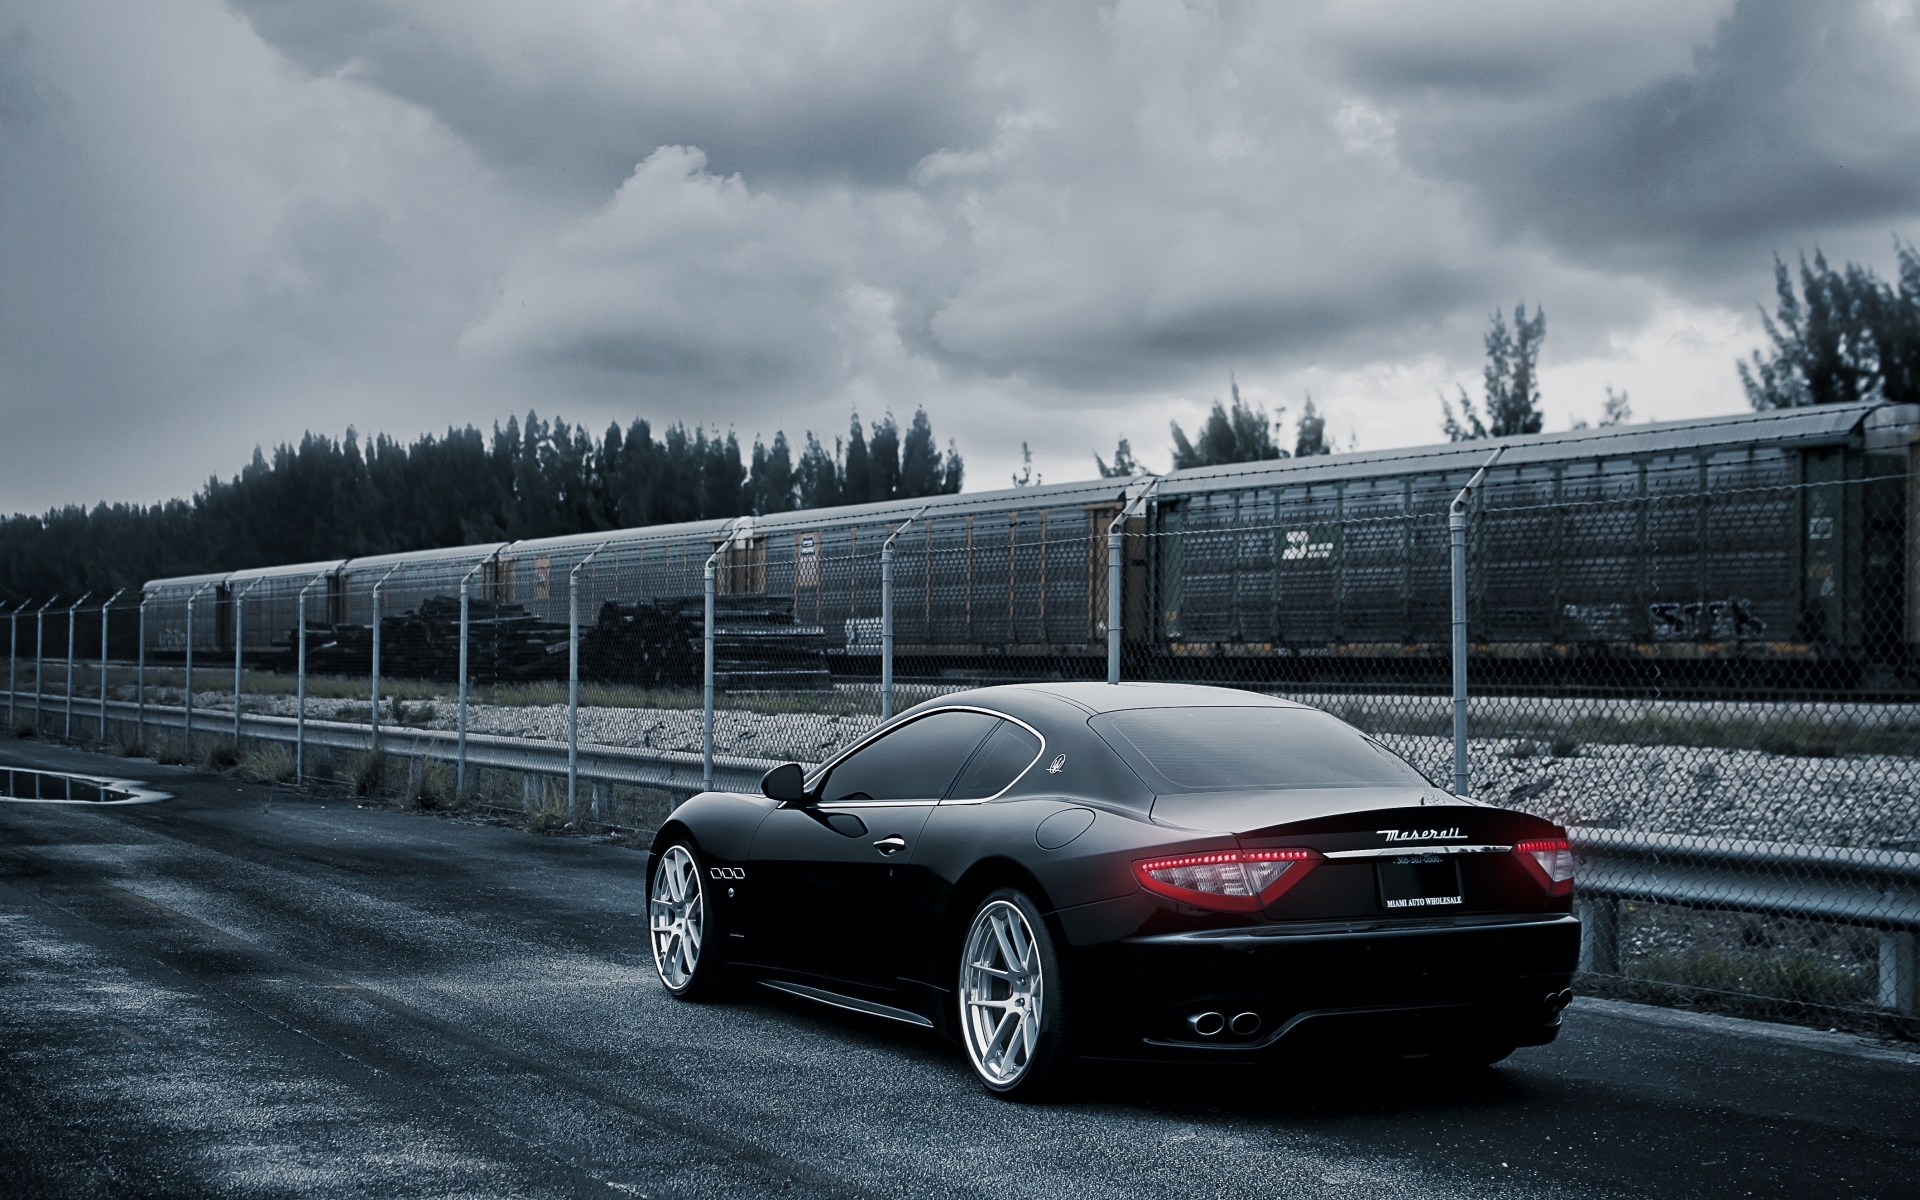 Maserati Image Car